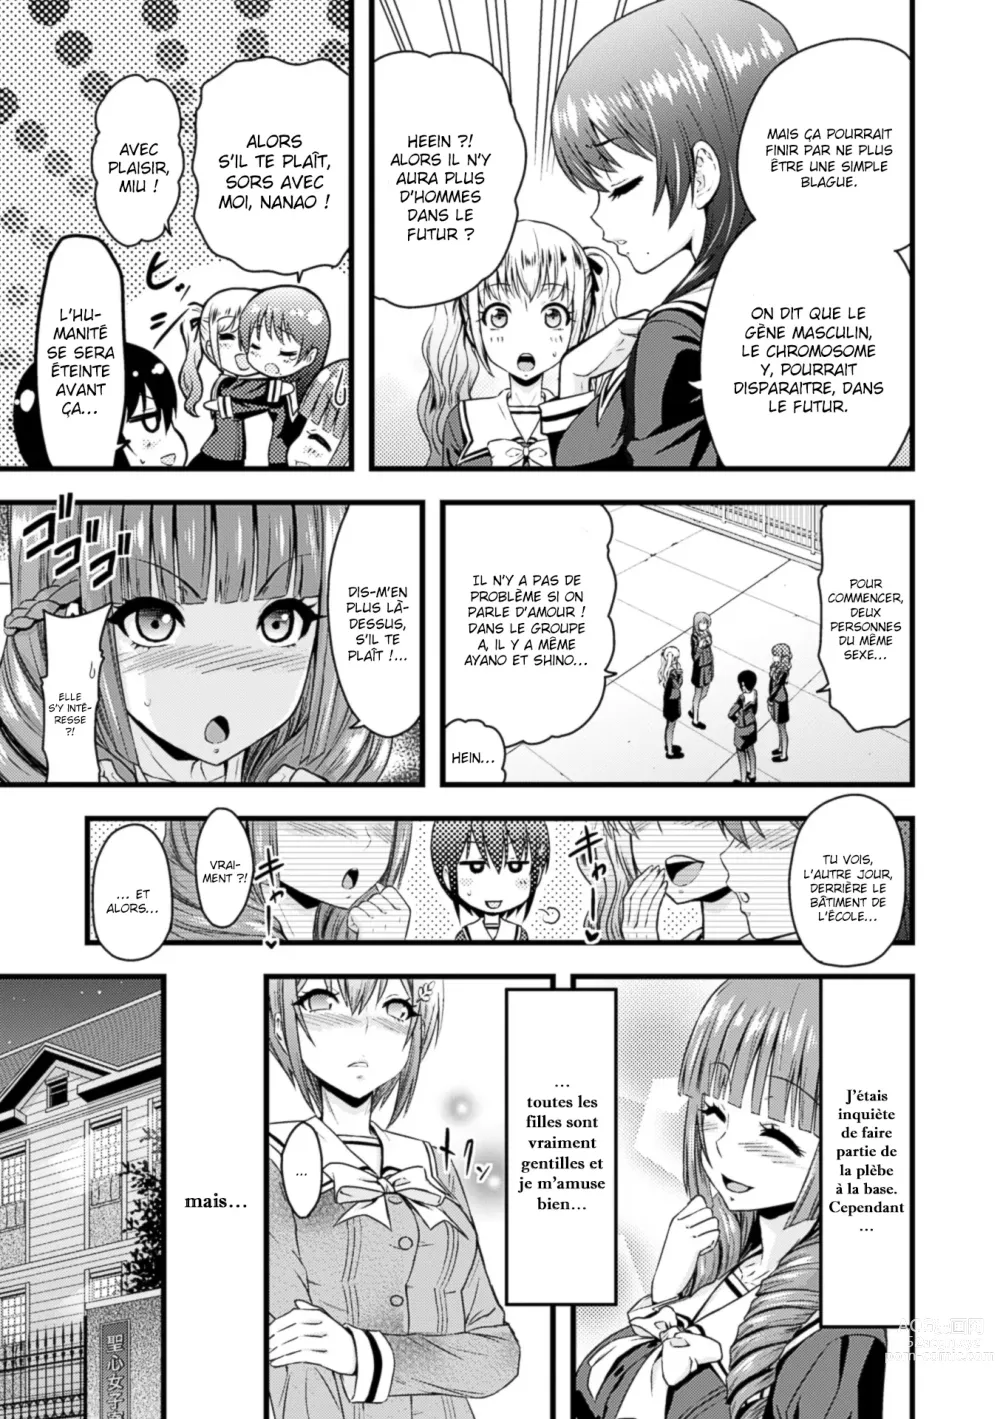 Page 4 of manga Eve no Sekai